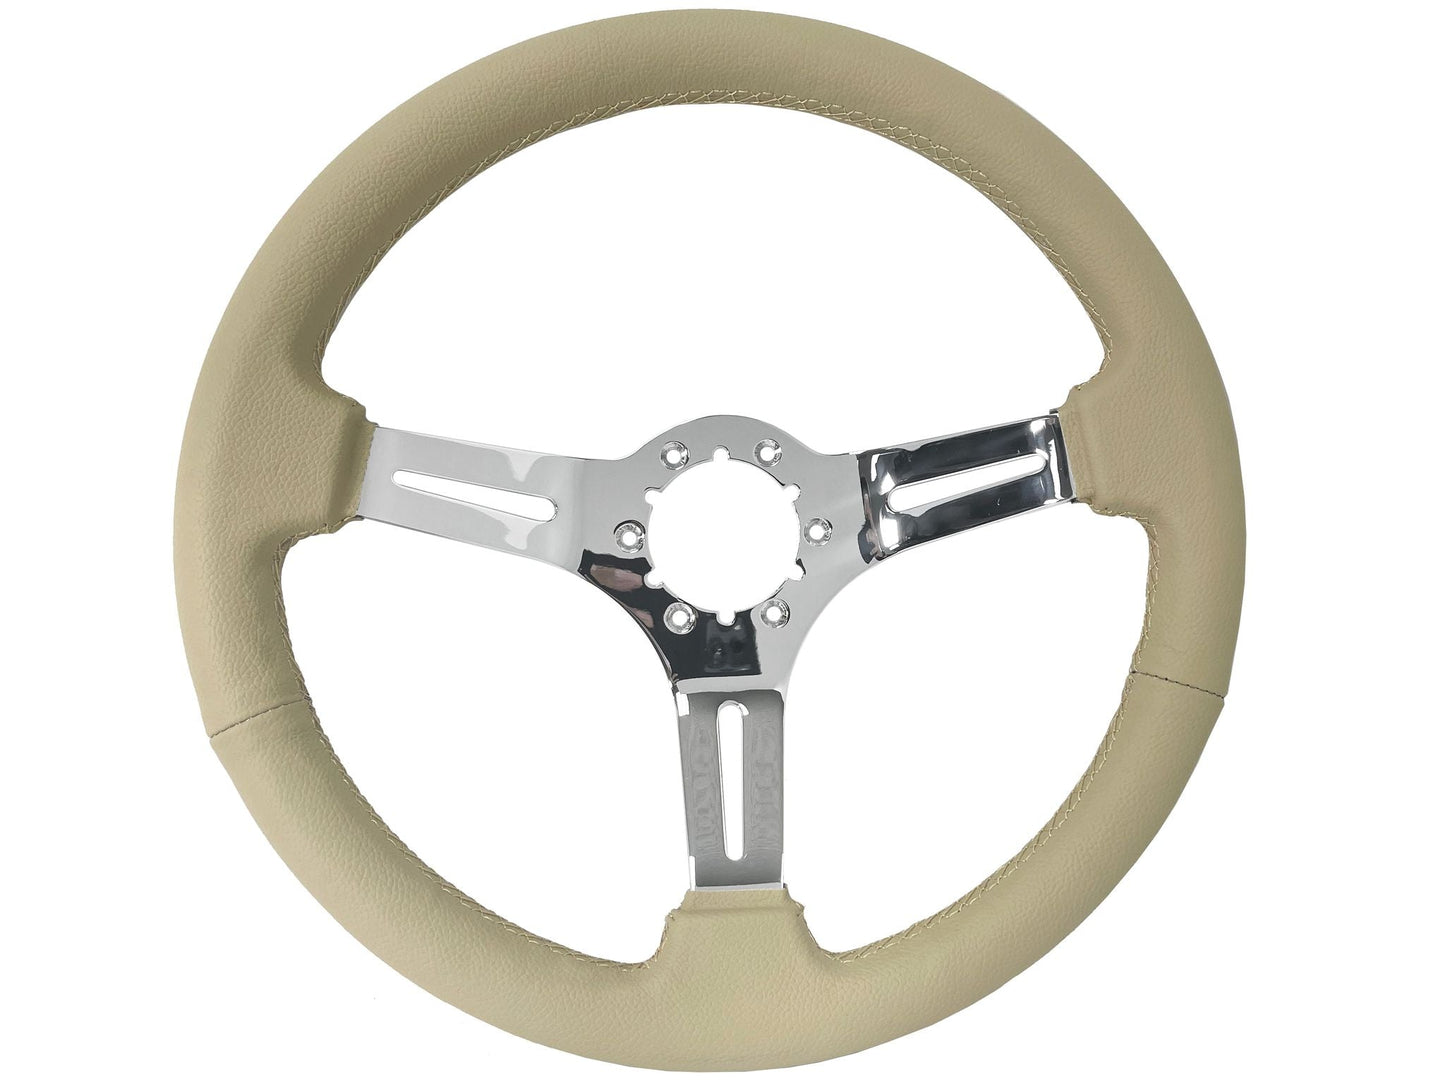 1965-69 Ford Falcon Steering Wheel Kit | Tan Leather | ST3012TAN